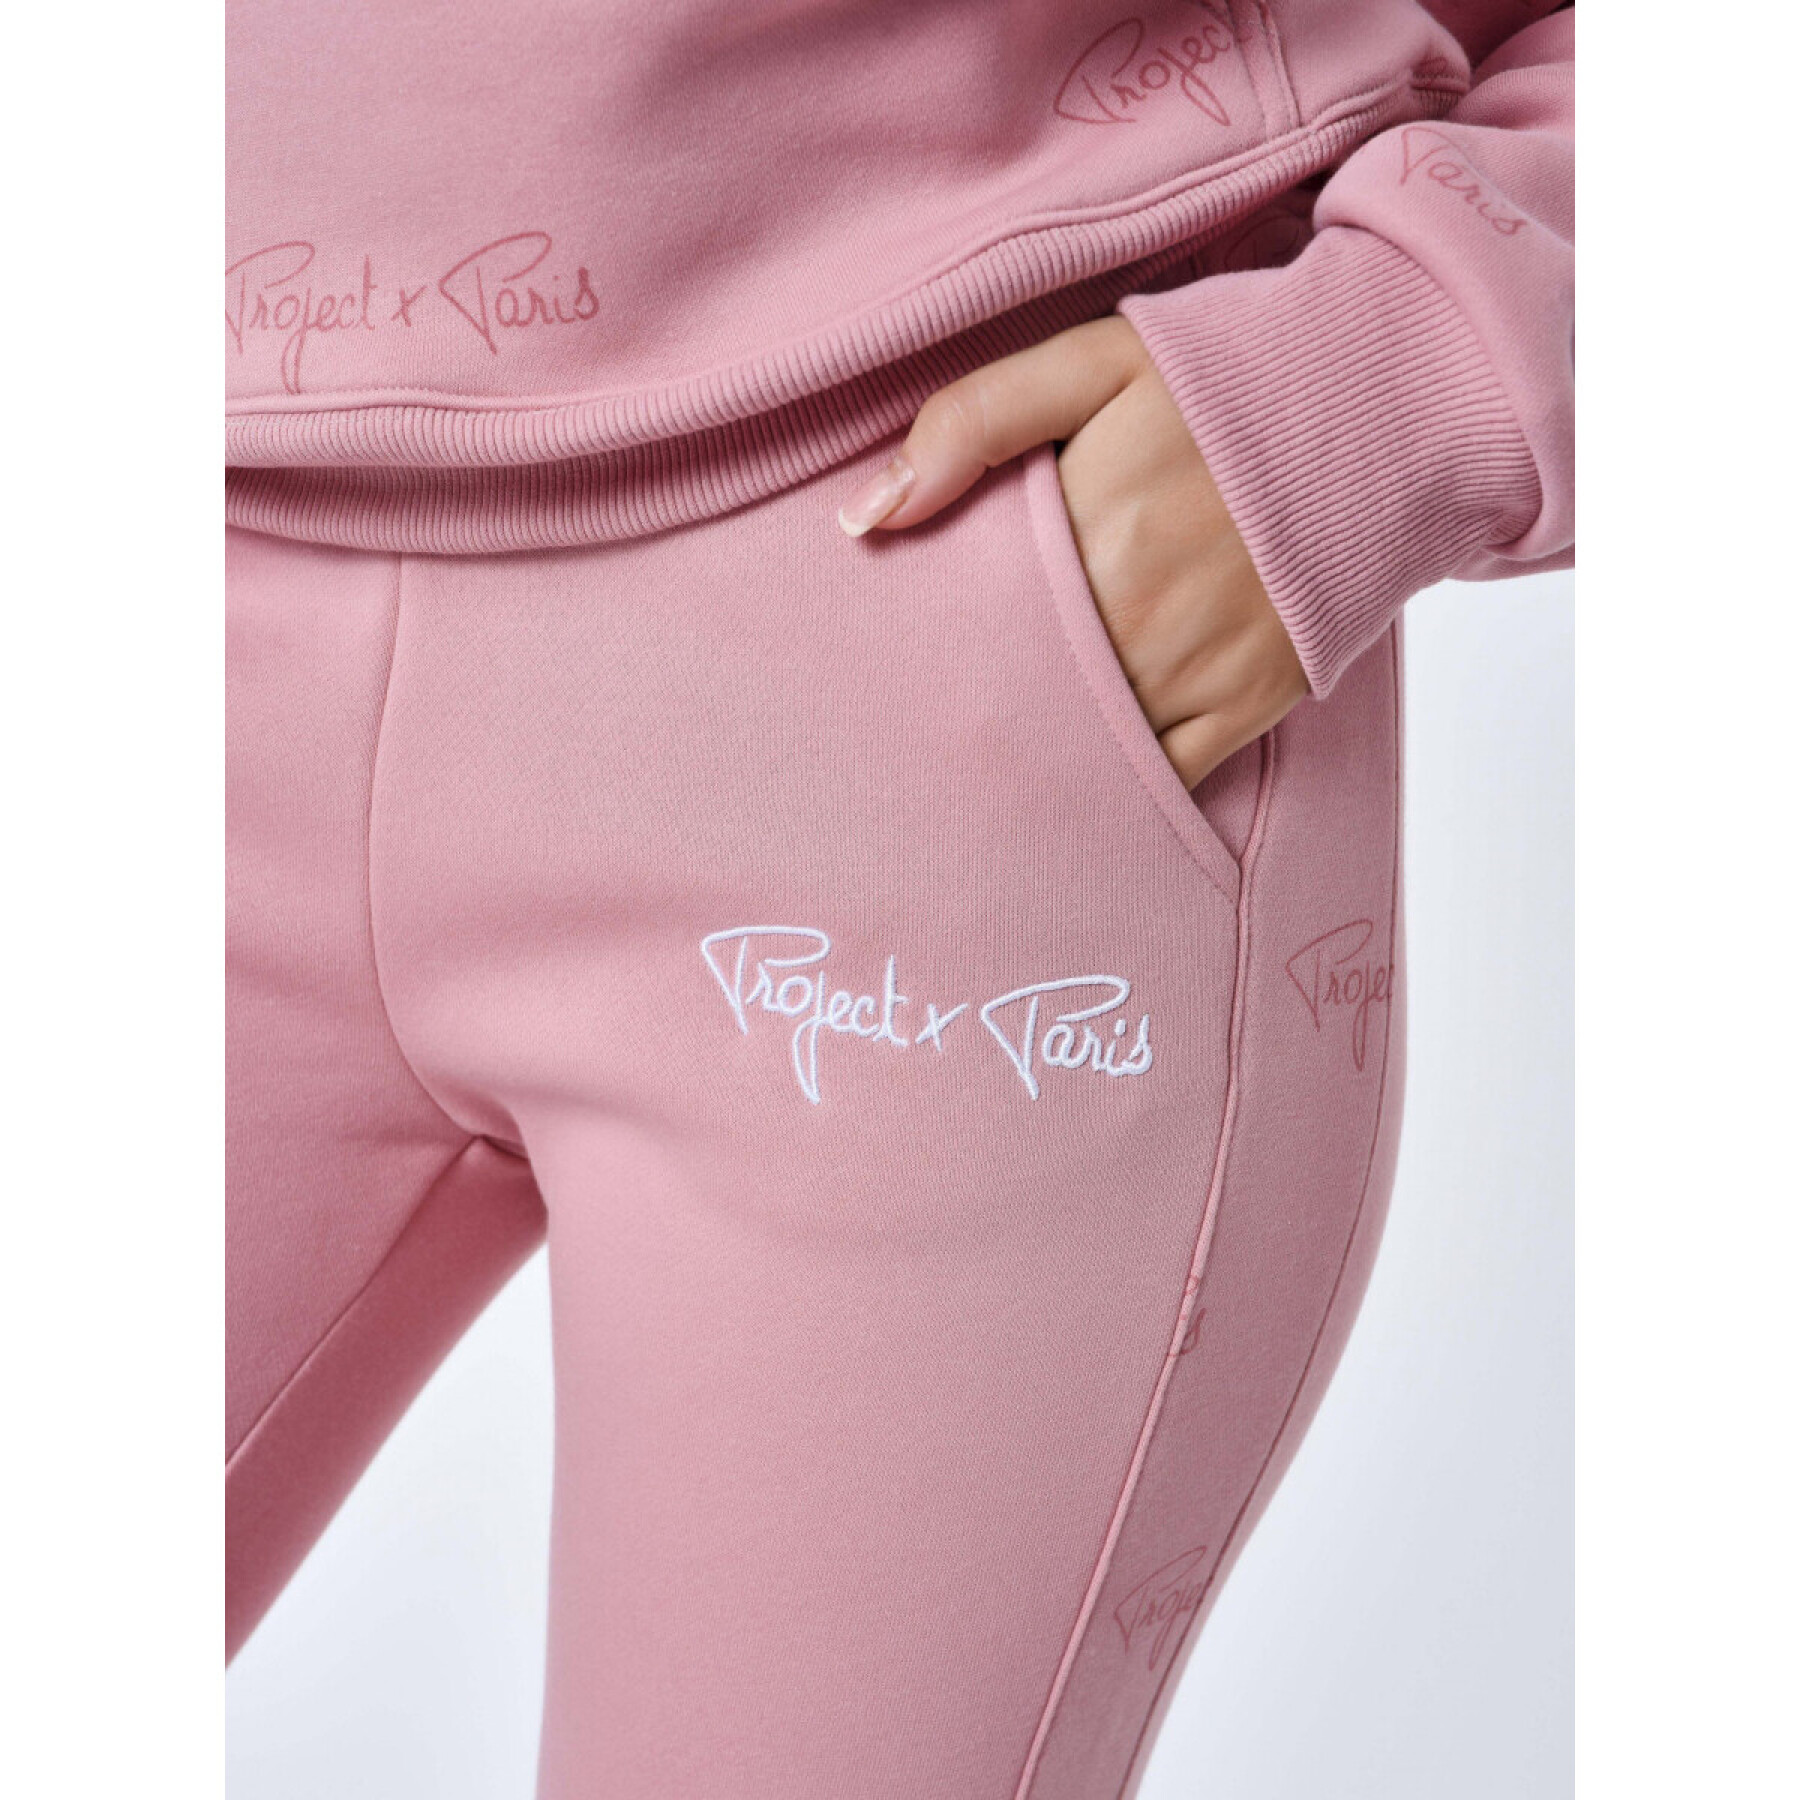 Women's banded jogging suit Project X Paris All Over Signature